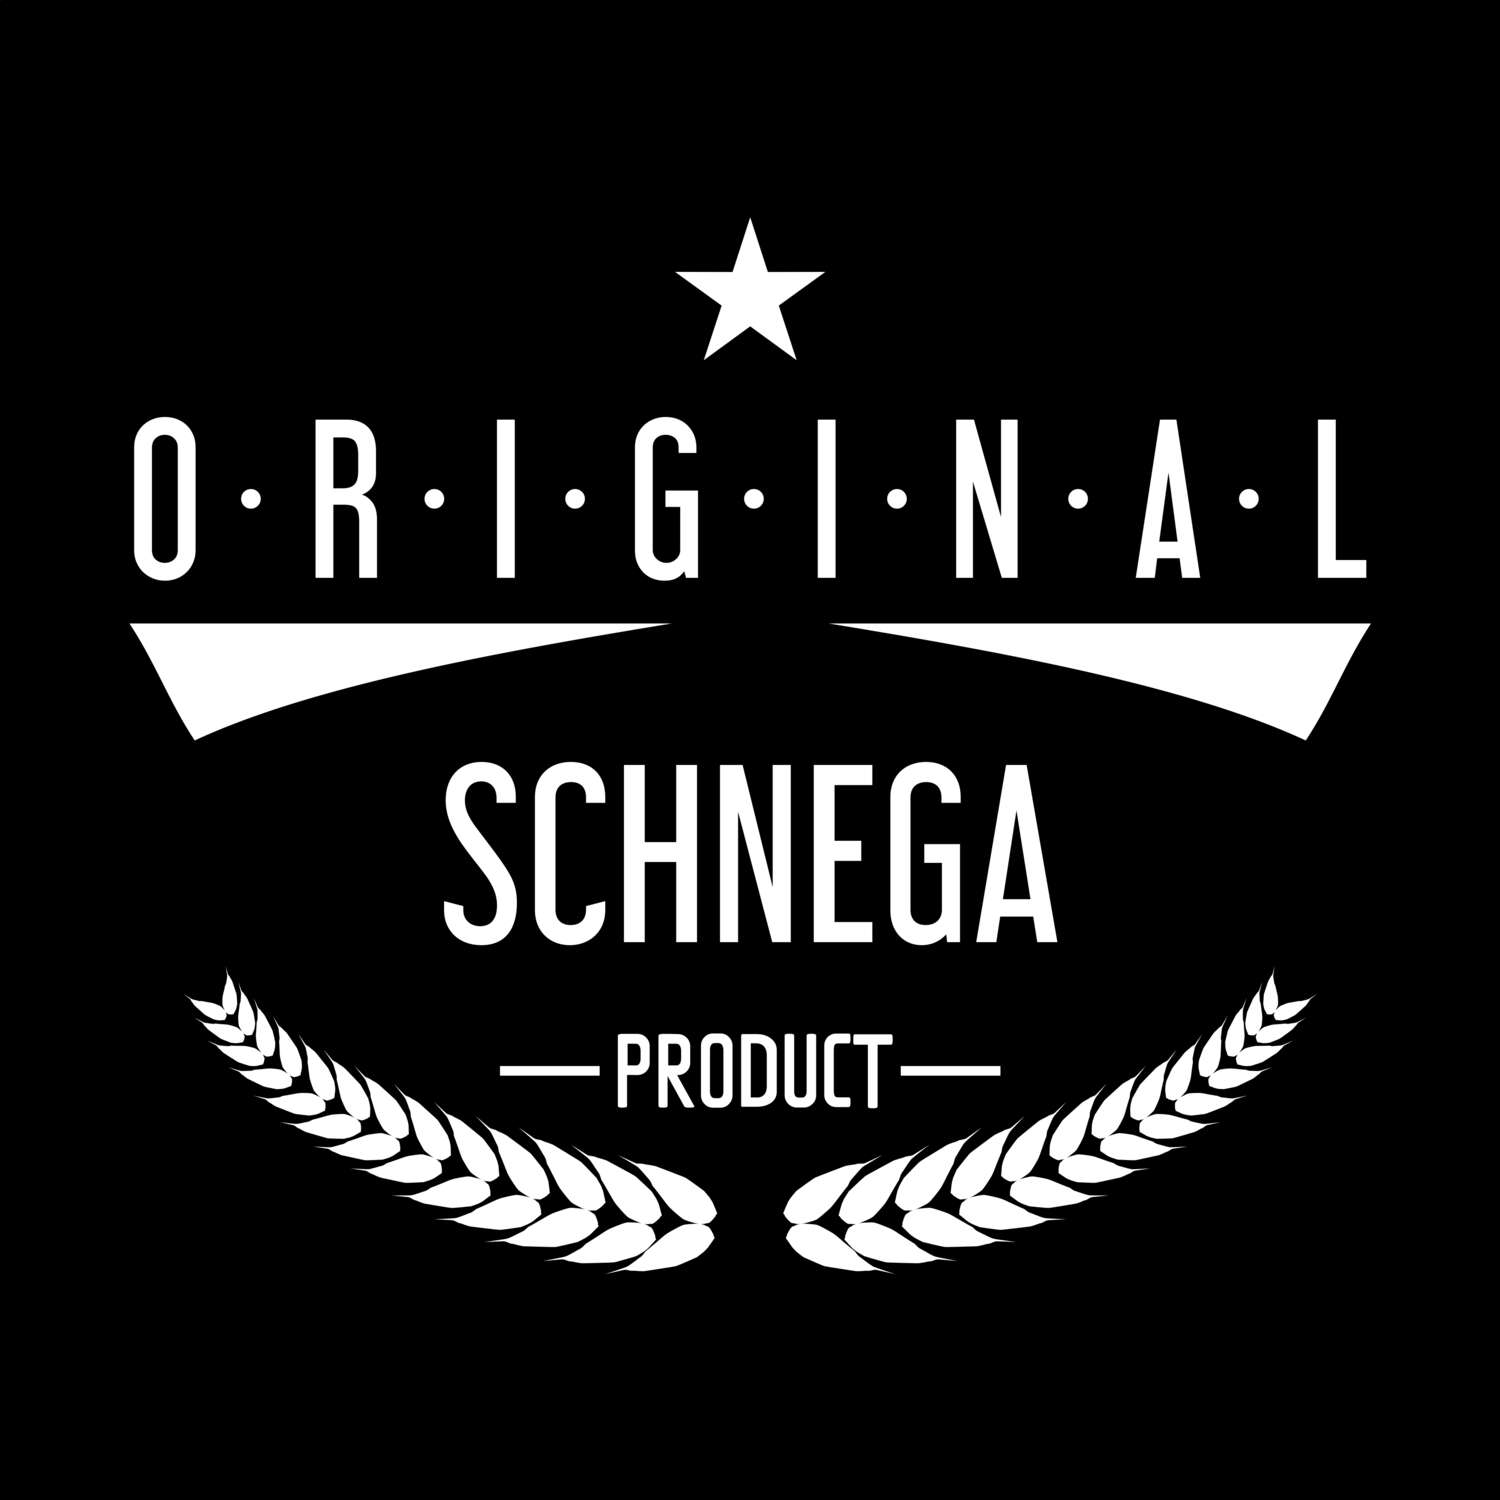 Schnega T-Shirt »Original Product«